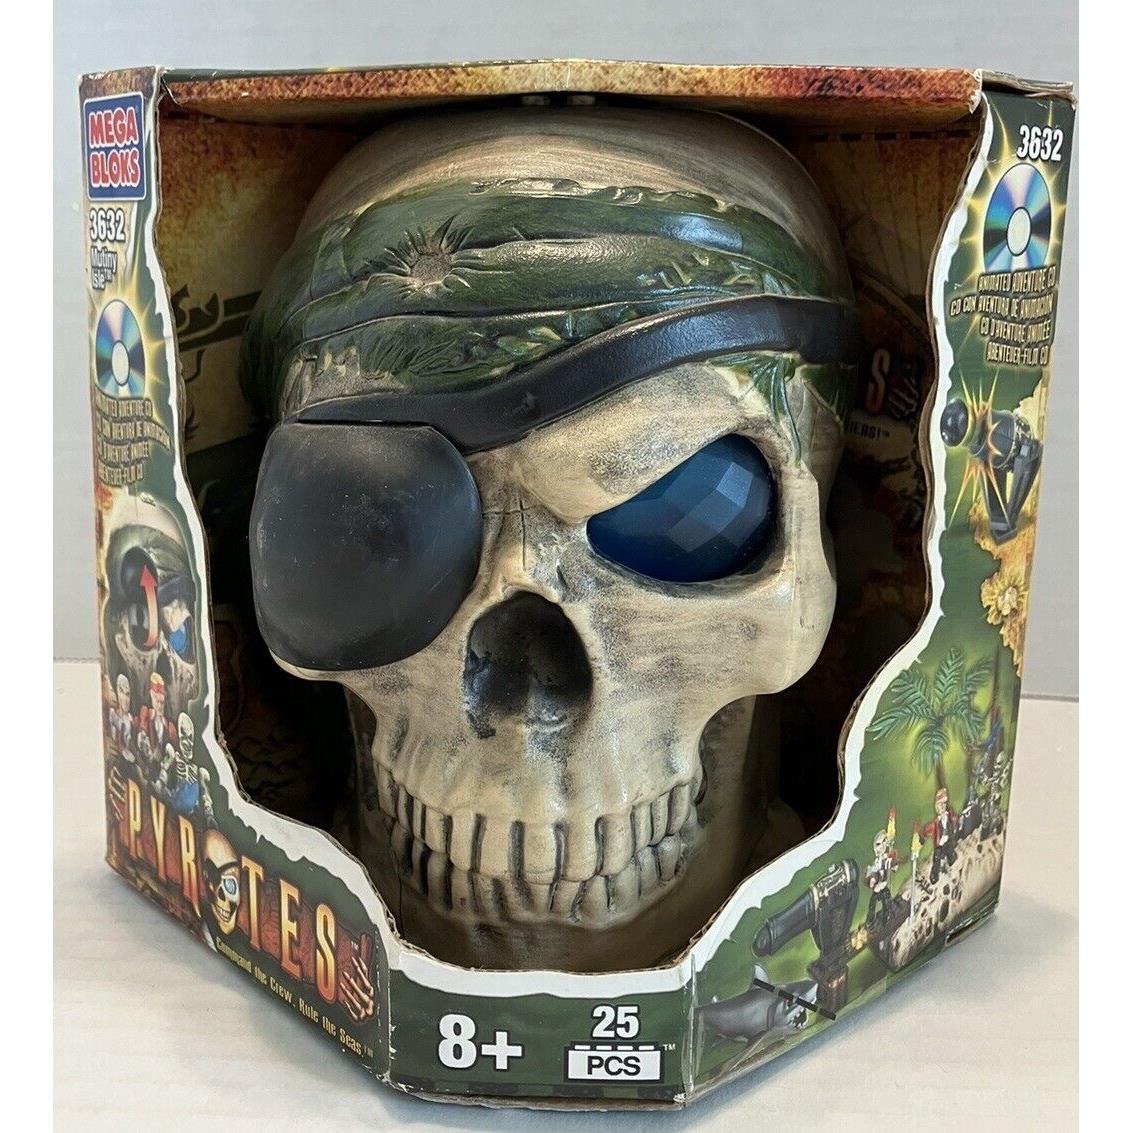 Mega Bloks Pyrates Mutiny Isle Disc 2005 Skull Halloween Collectible 3632